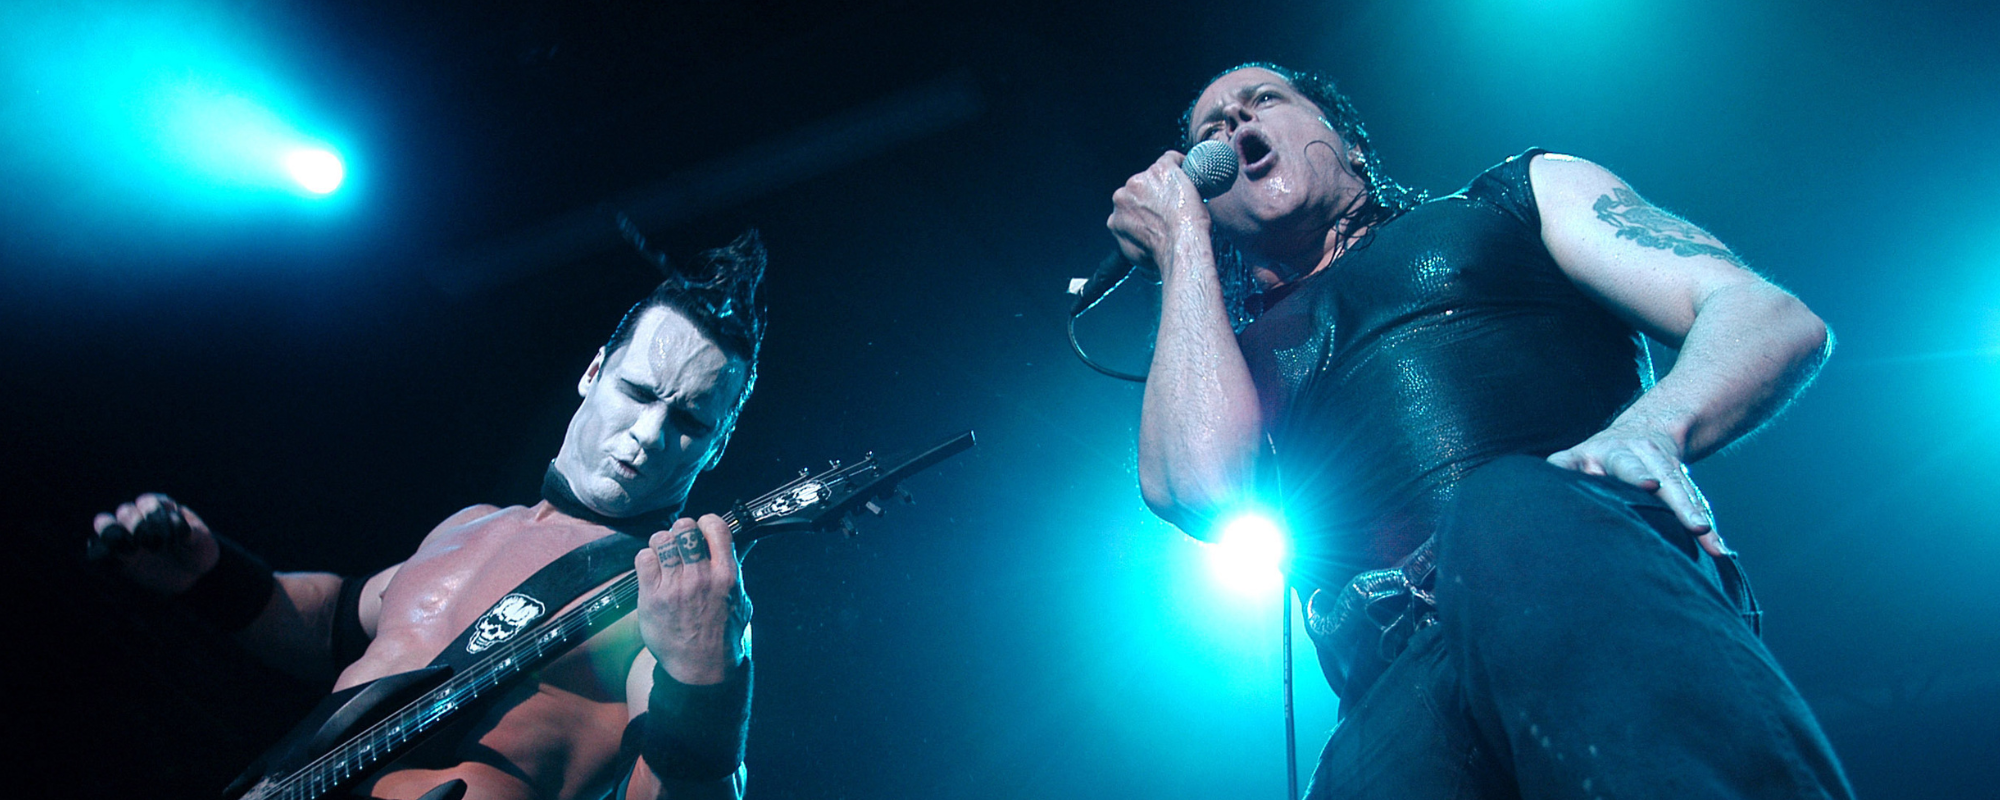 Danzig Announces 2023 Tour Celebrating 35th Anniversary of Debut Album